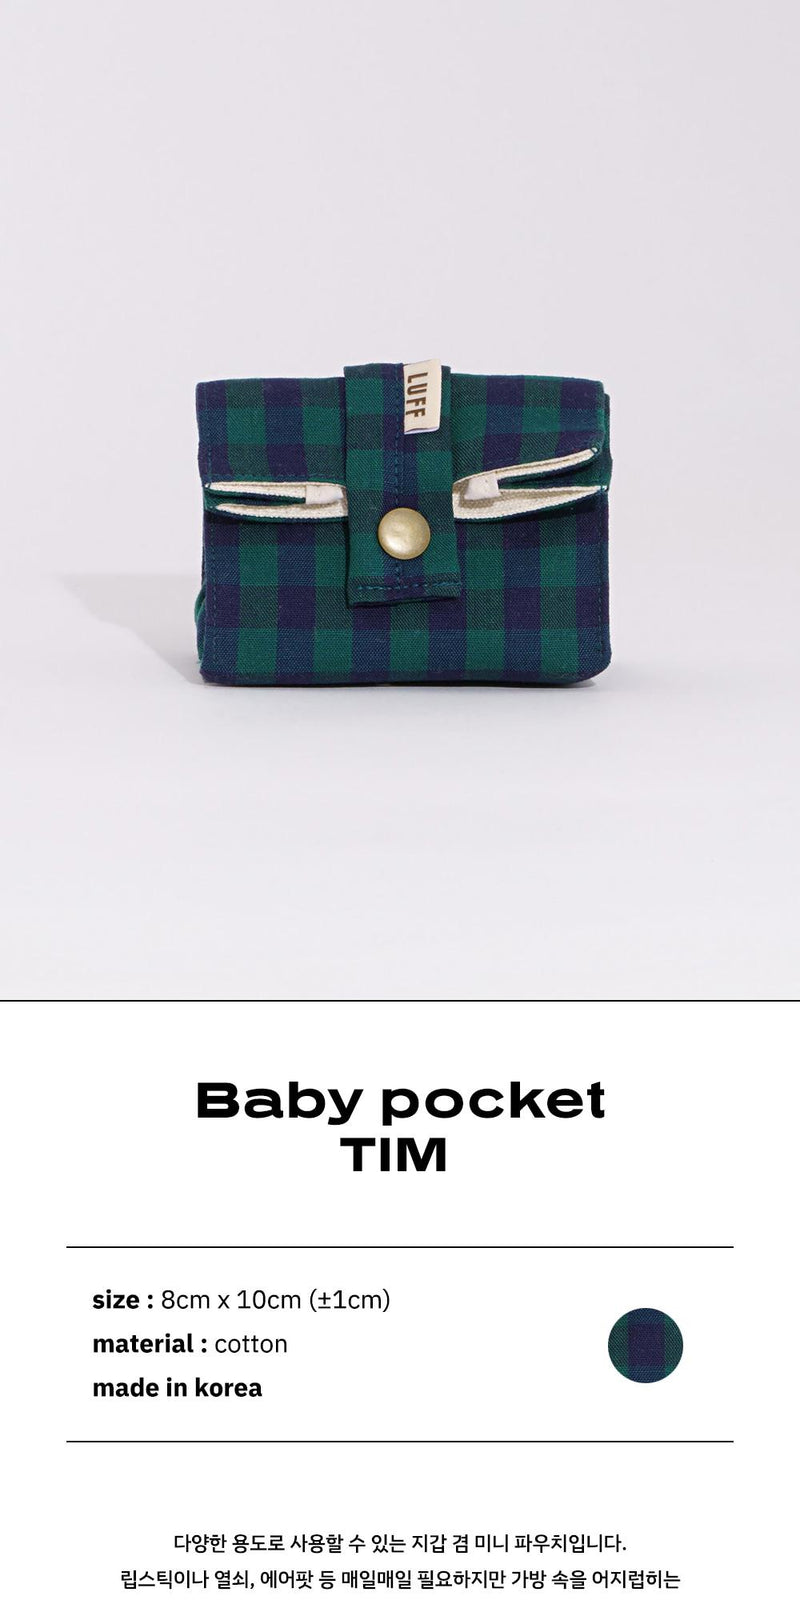 baby pocket - tim